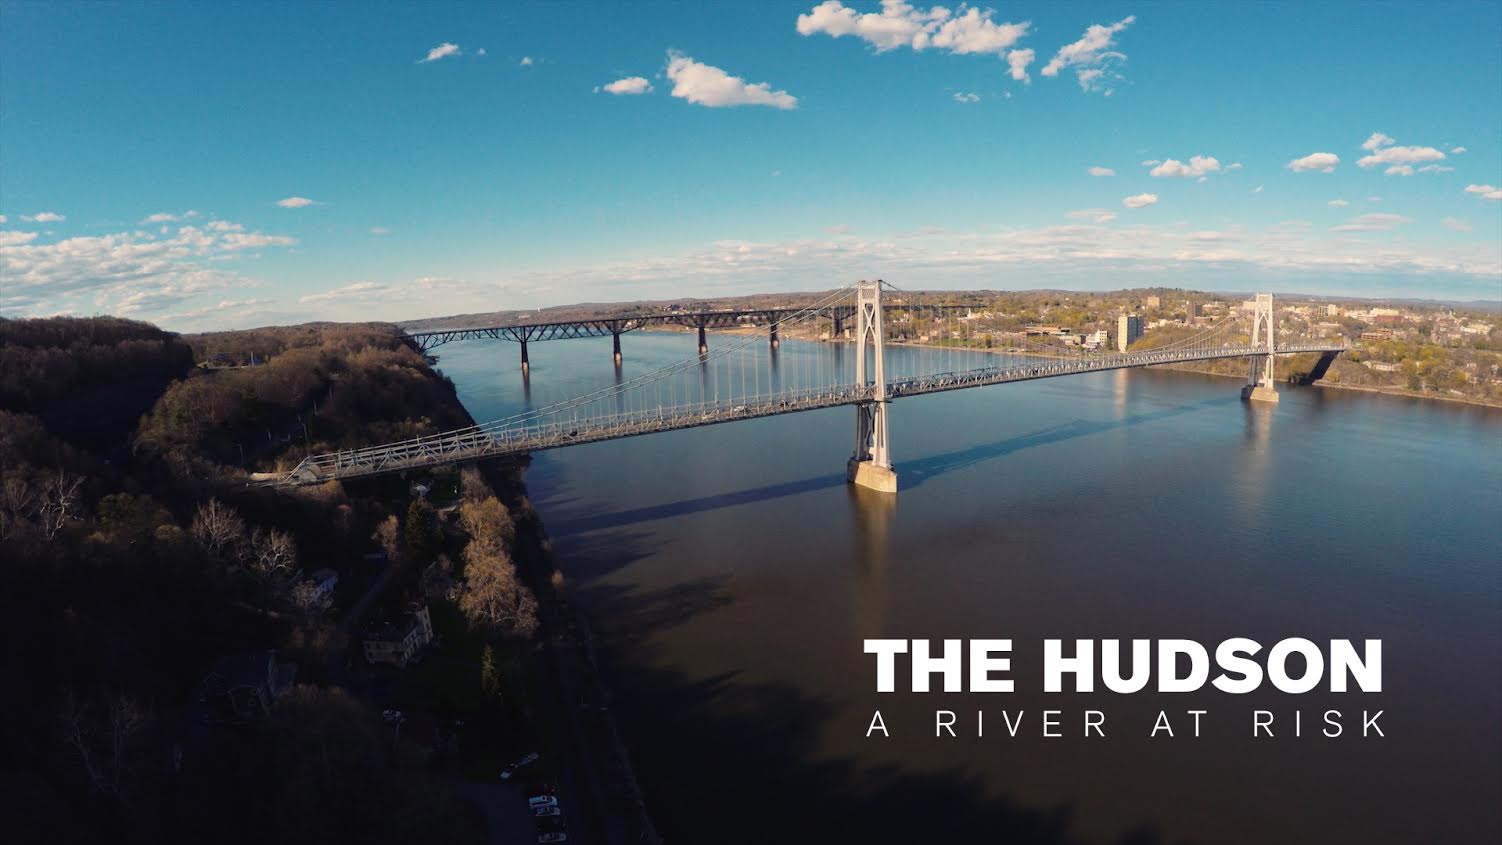 Jon Bowermaster's Hudson River at Risk